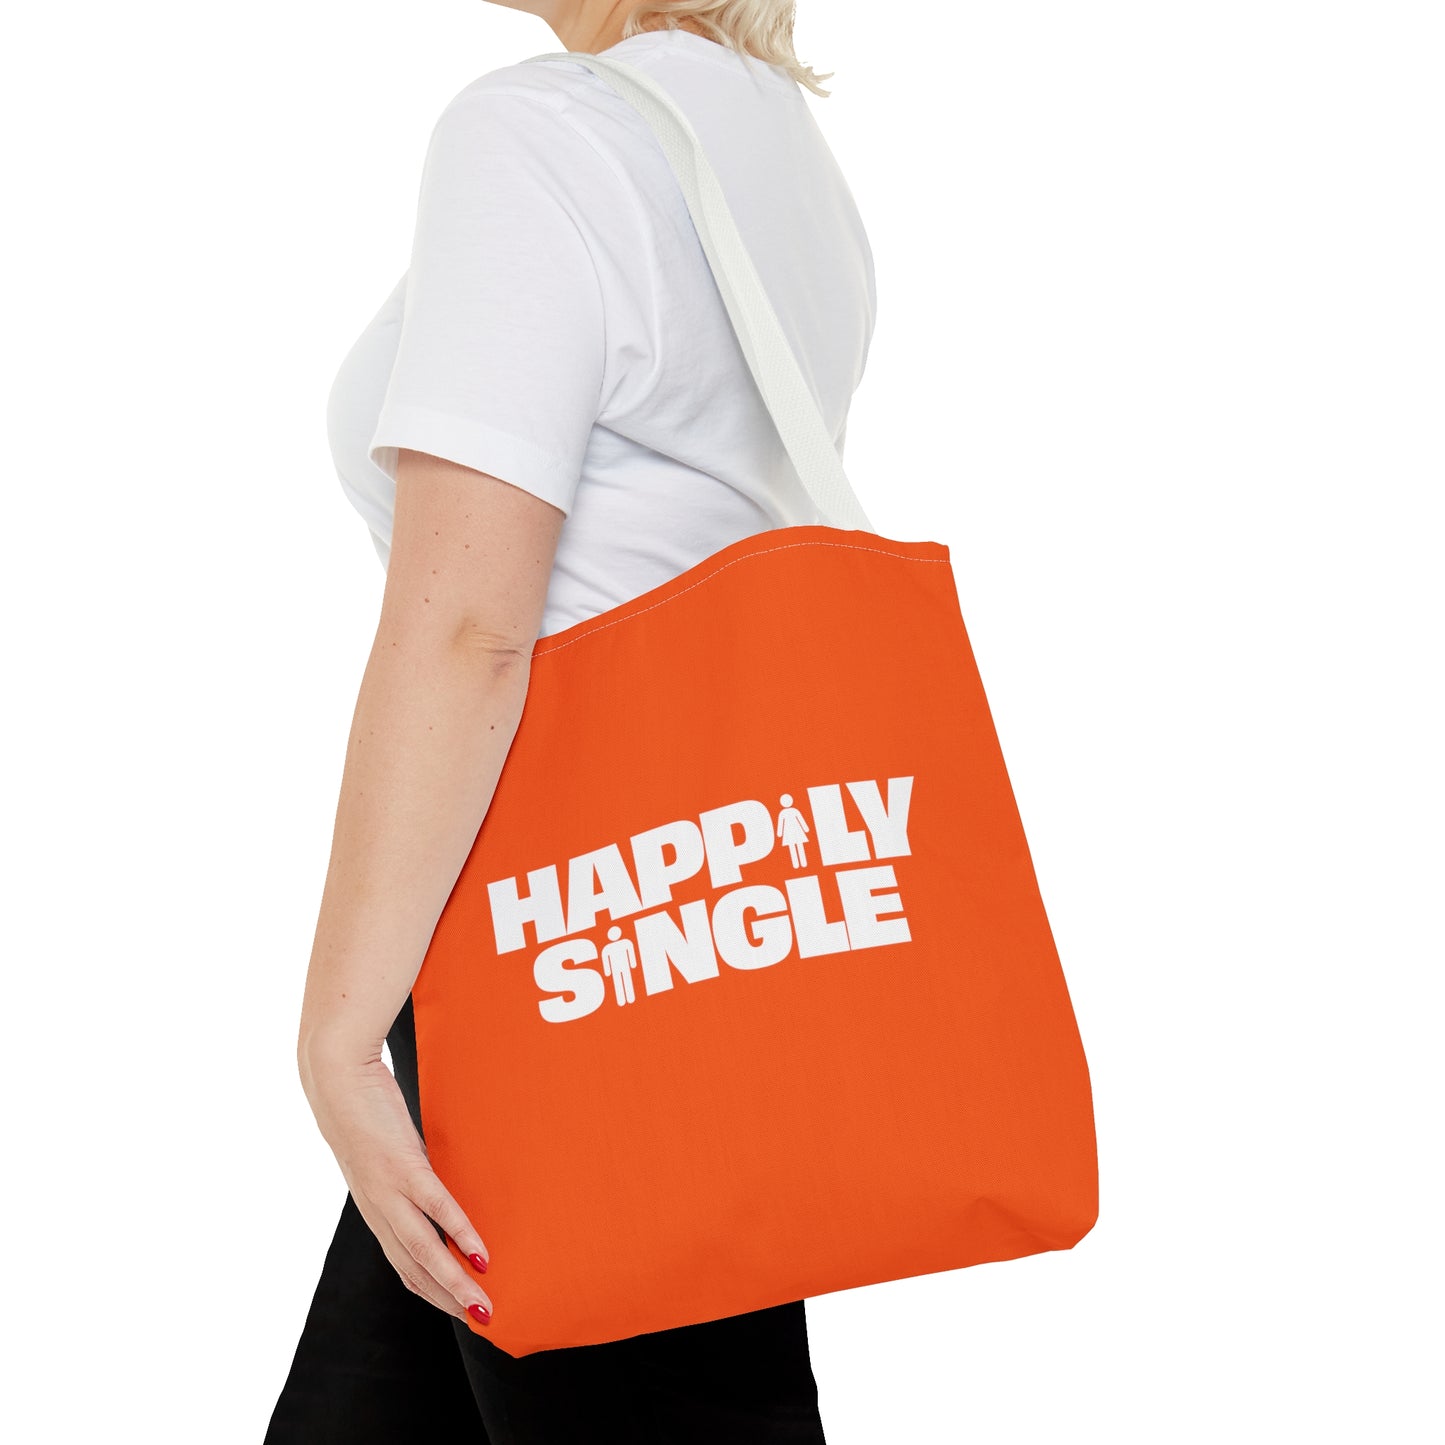 Happily Single Tote Bag